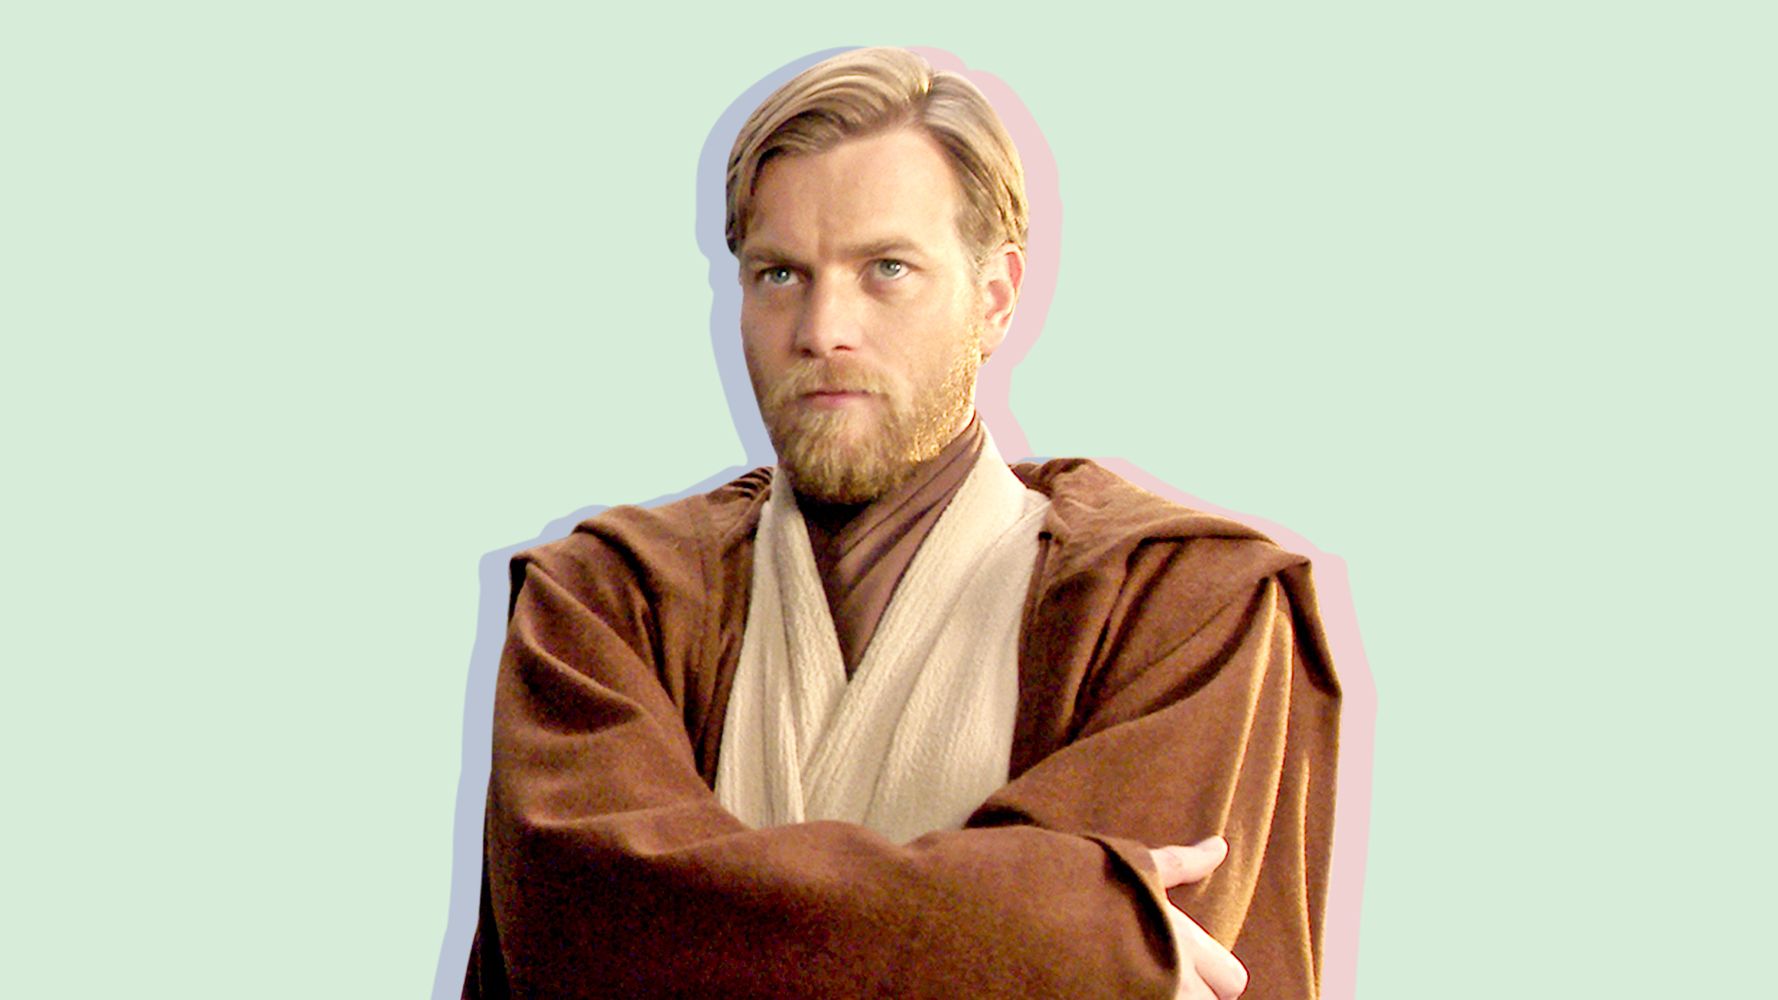 Obi-Wan Kenobi: A Jedi's Return: Where to Watch & Stream Online